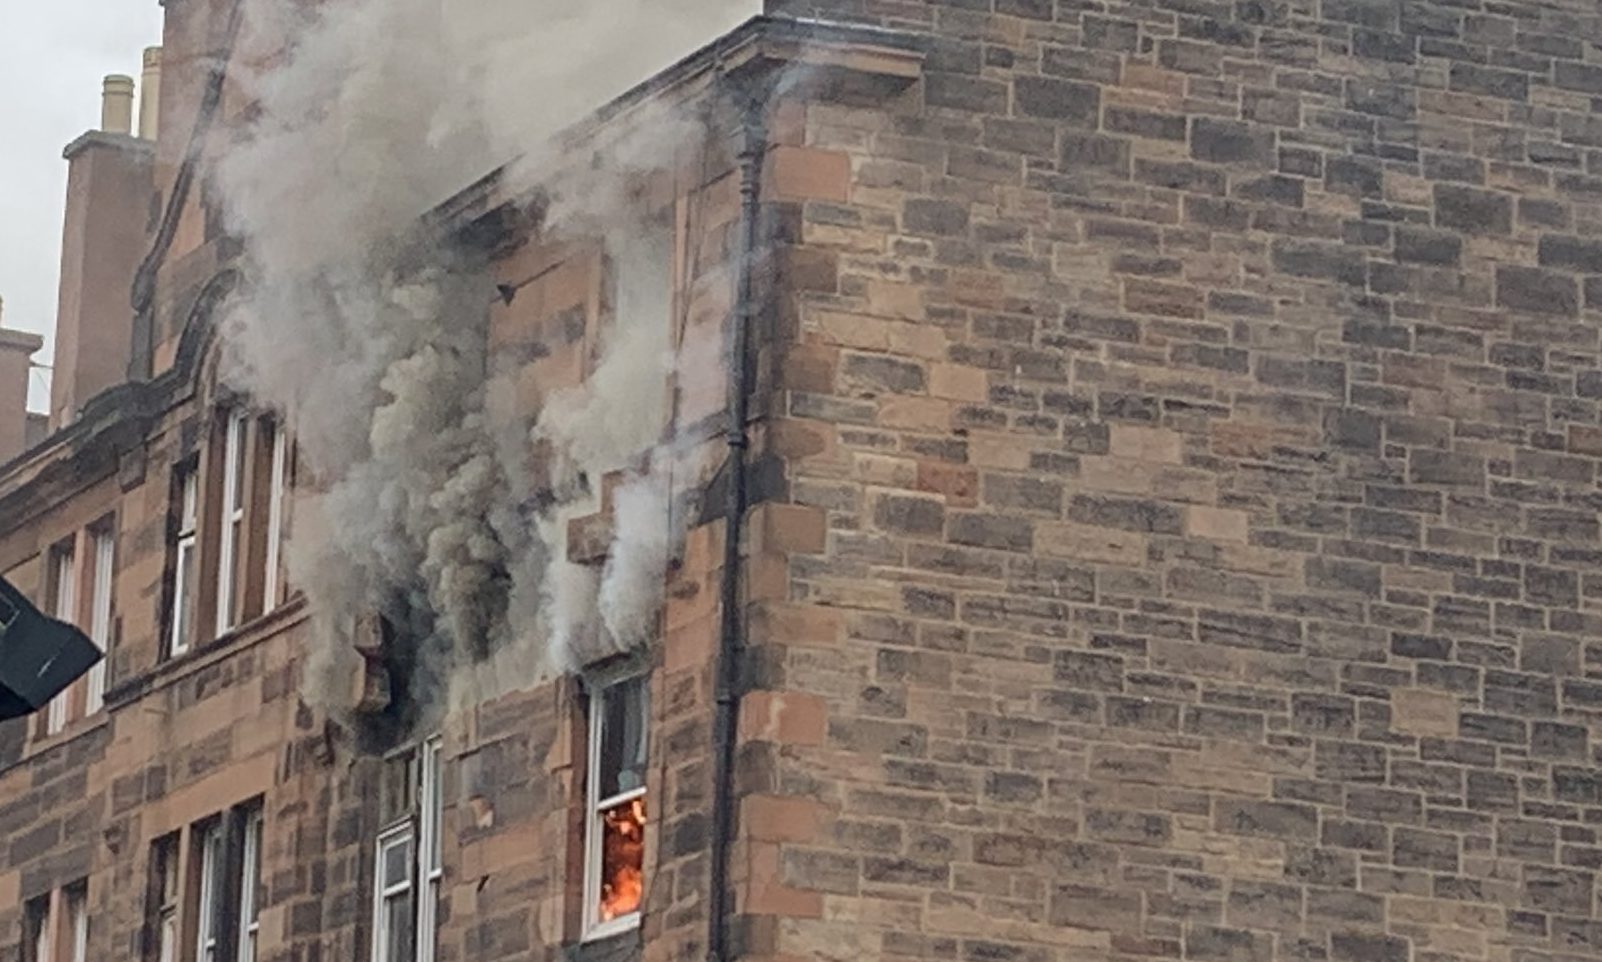 The fire in Fountainbridge, Edinburgh.